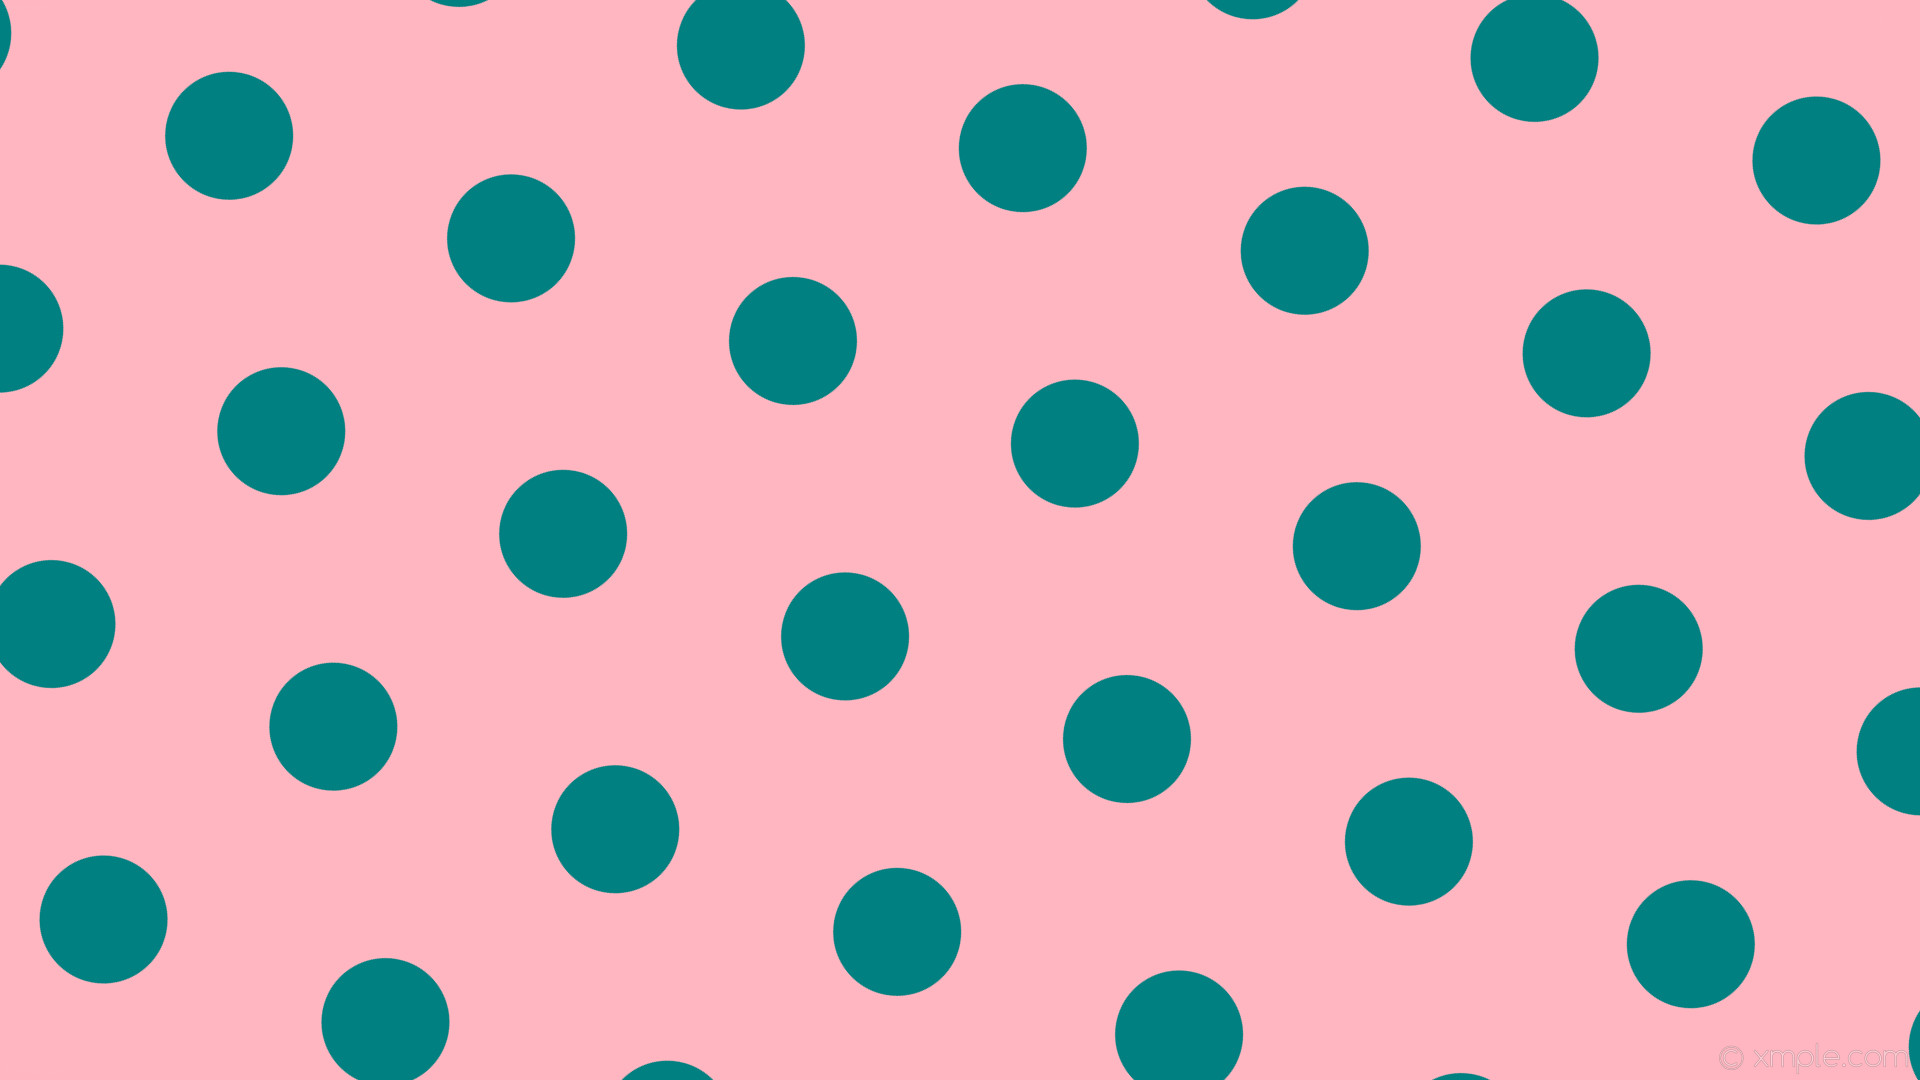 Wallpaper Pink Polka Dots Green Hexagon Light Pink Teal Ffb6c1 008080 Diagonal 40 1920x1080